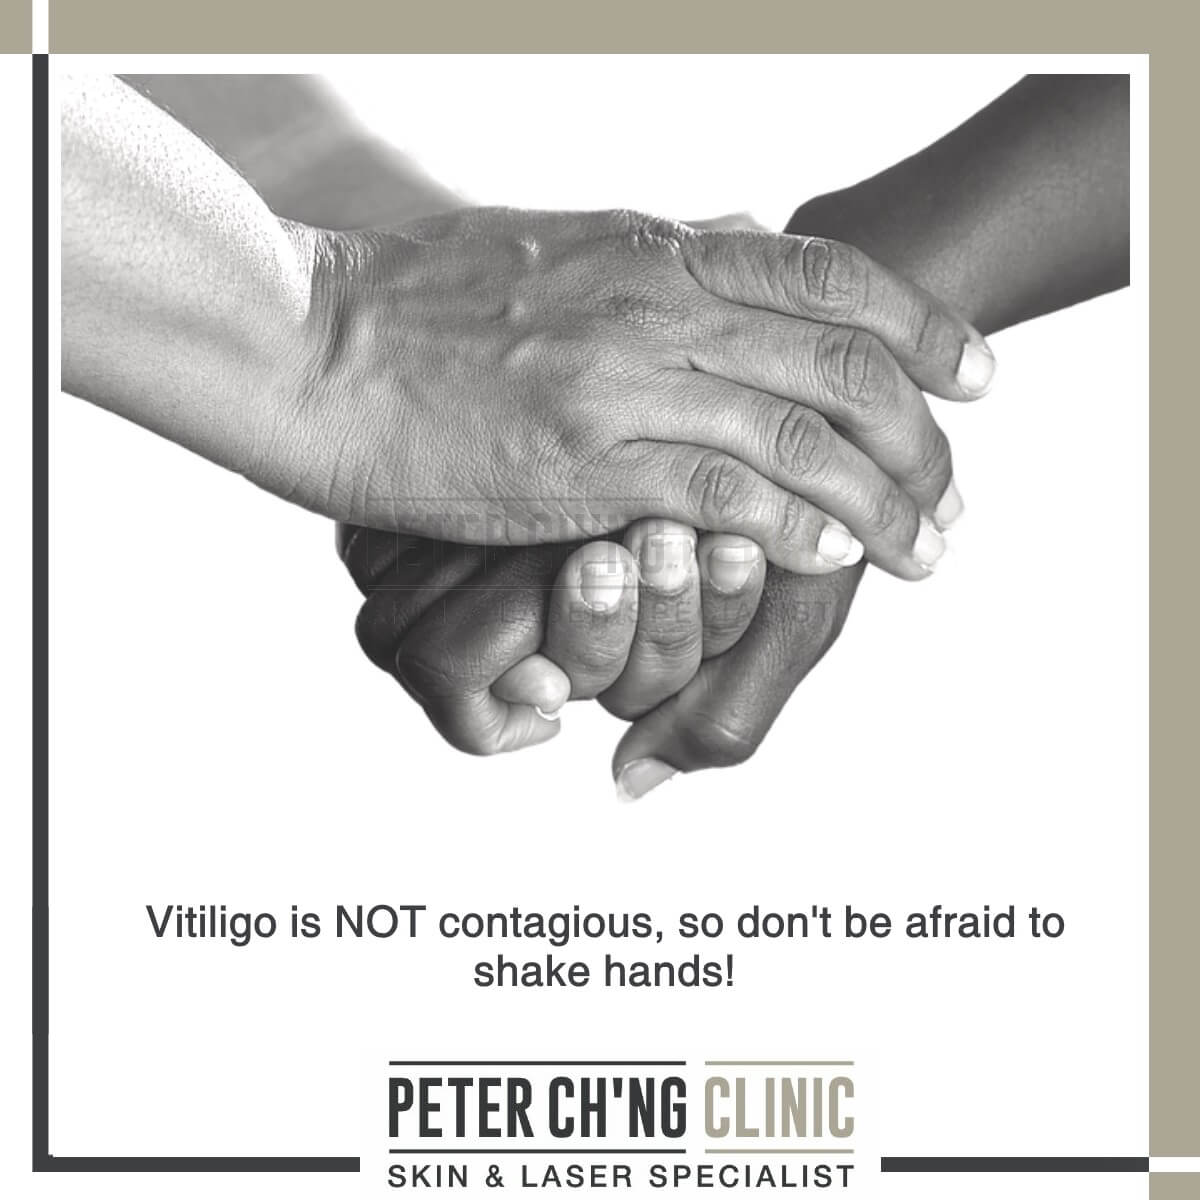 Vitiligo is not contagious